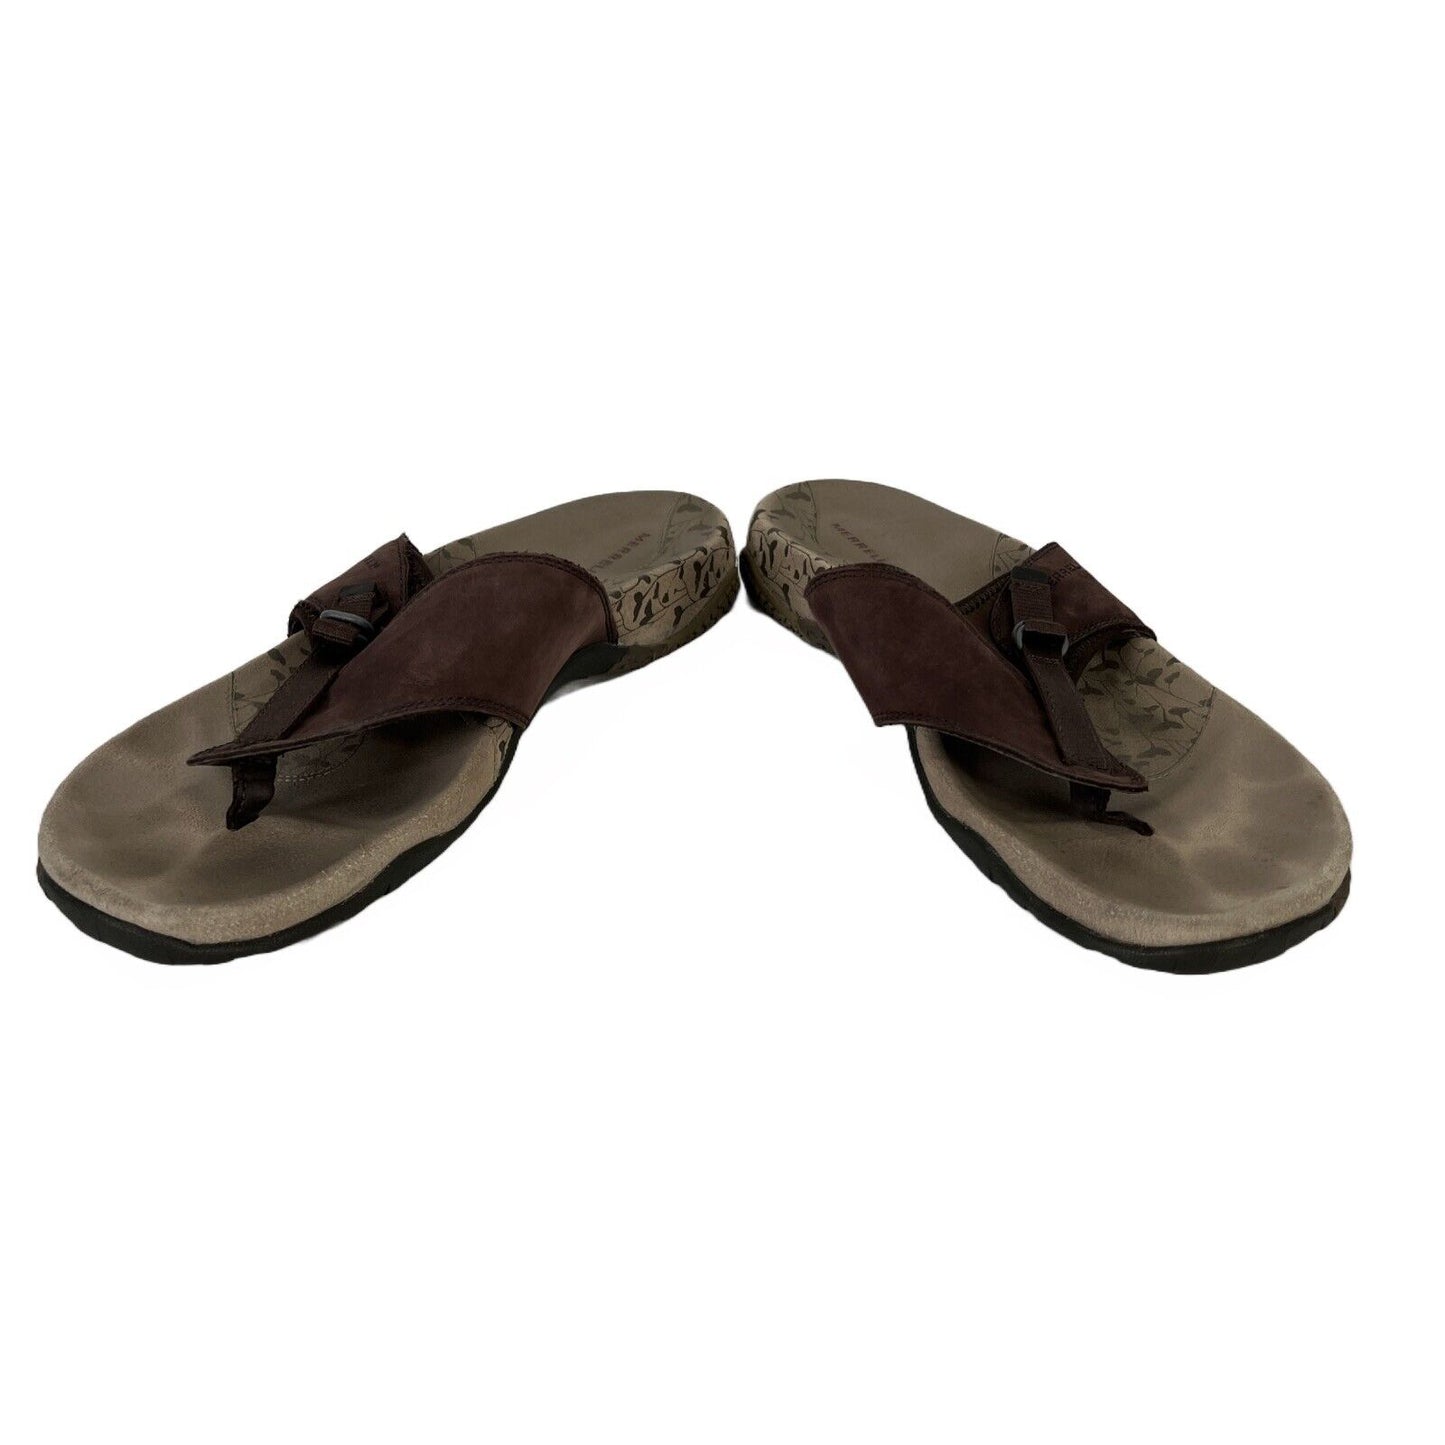 Merrell Women's Brown Dark Earth Sport Flip Flop Sandals - 10